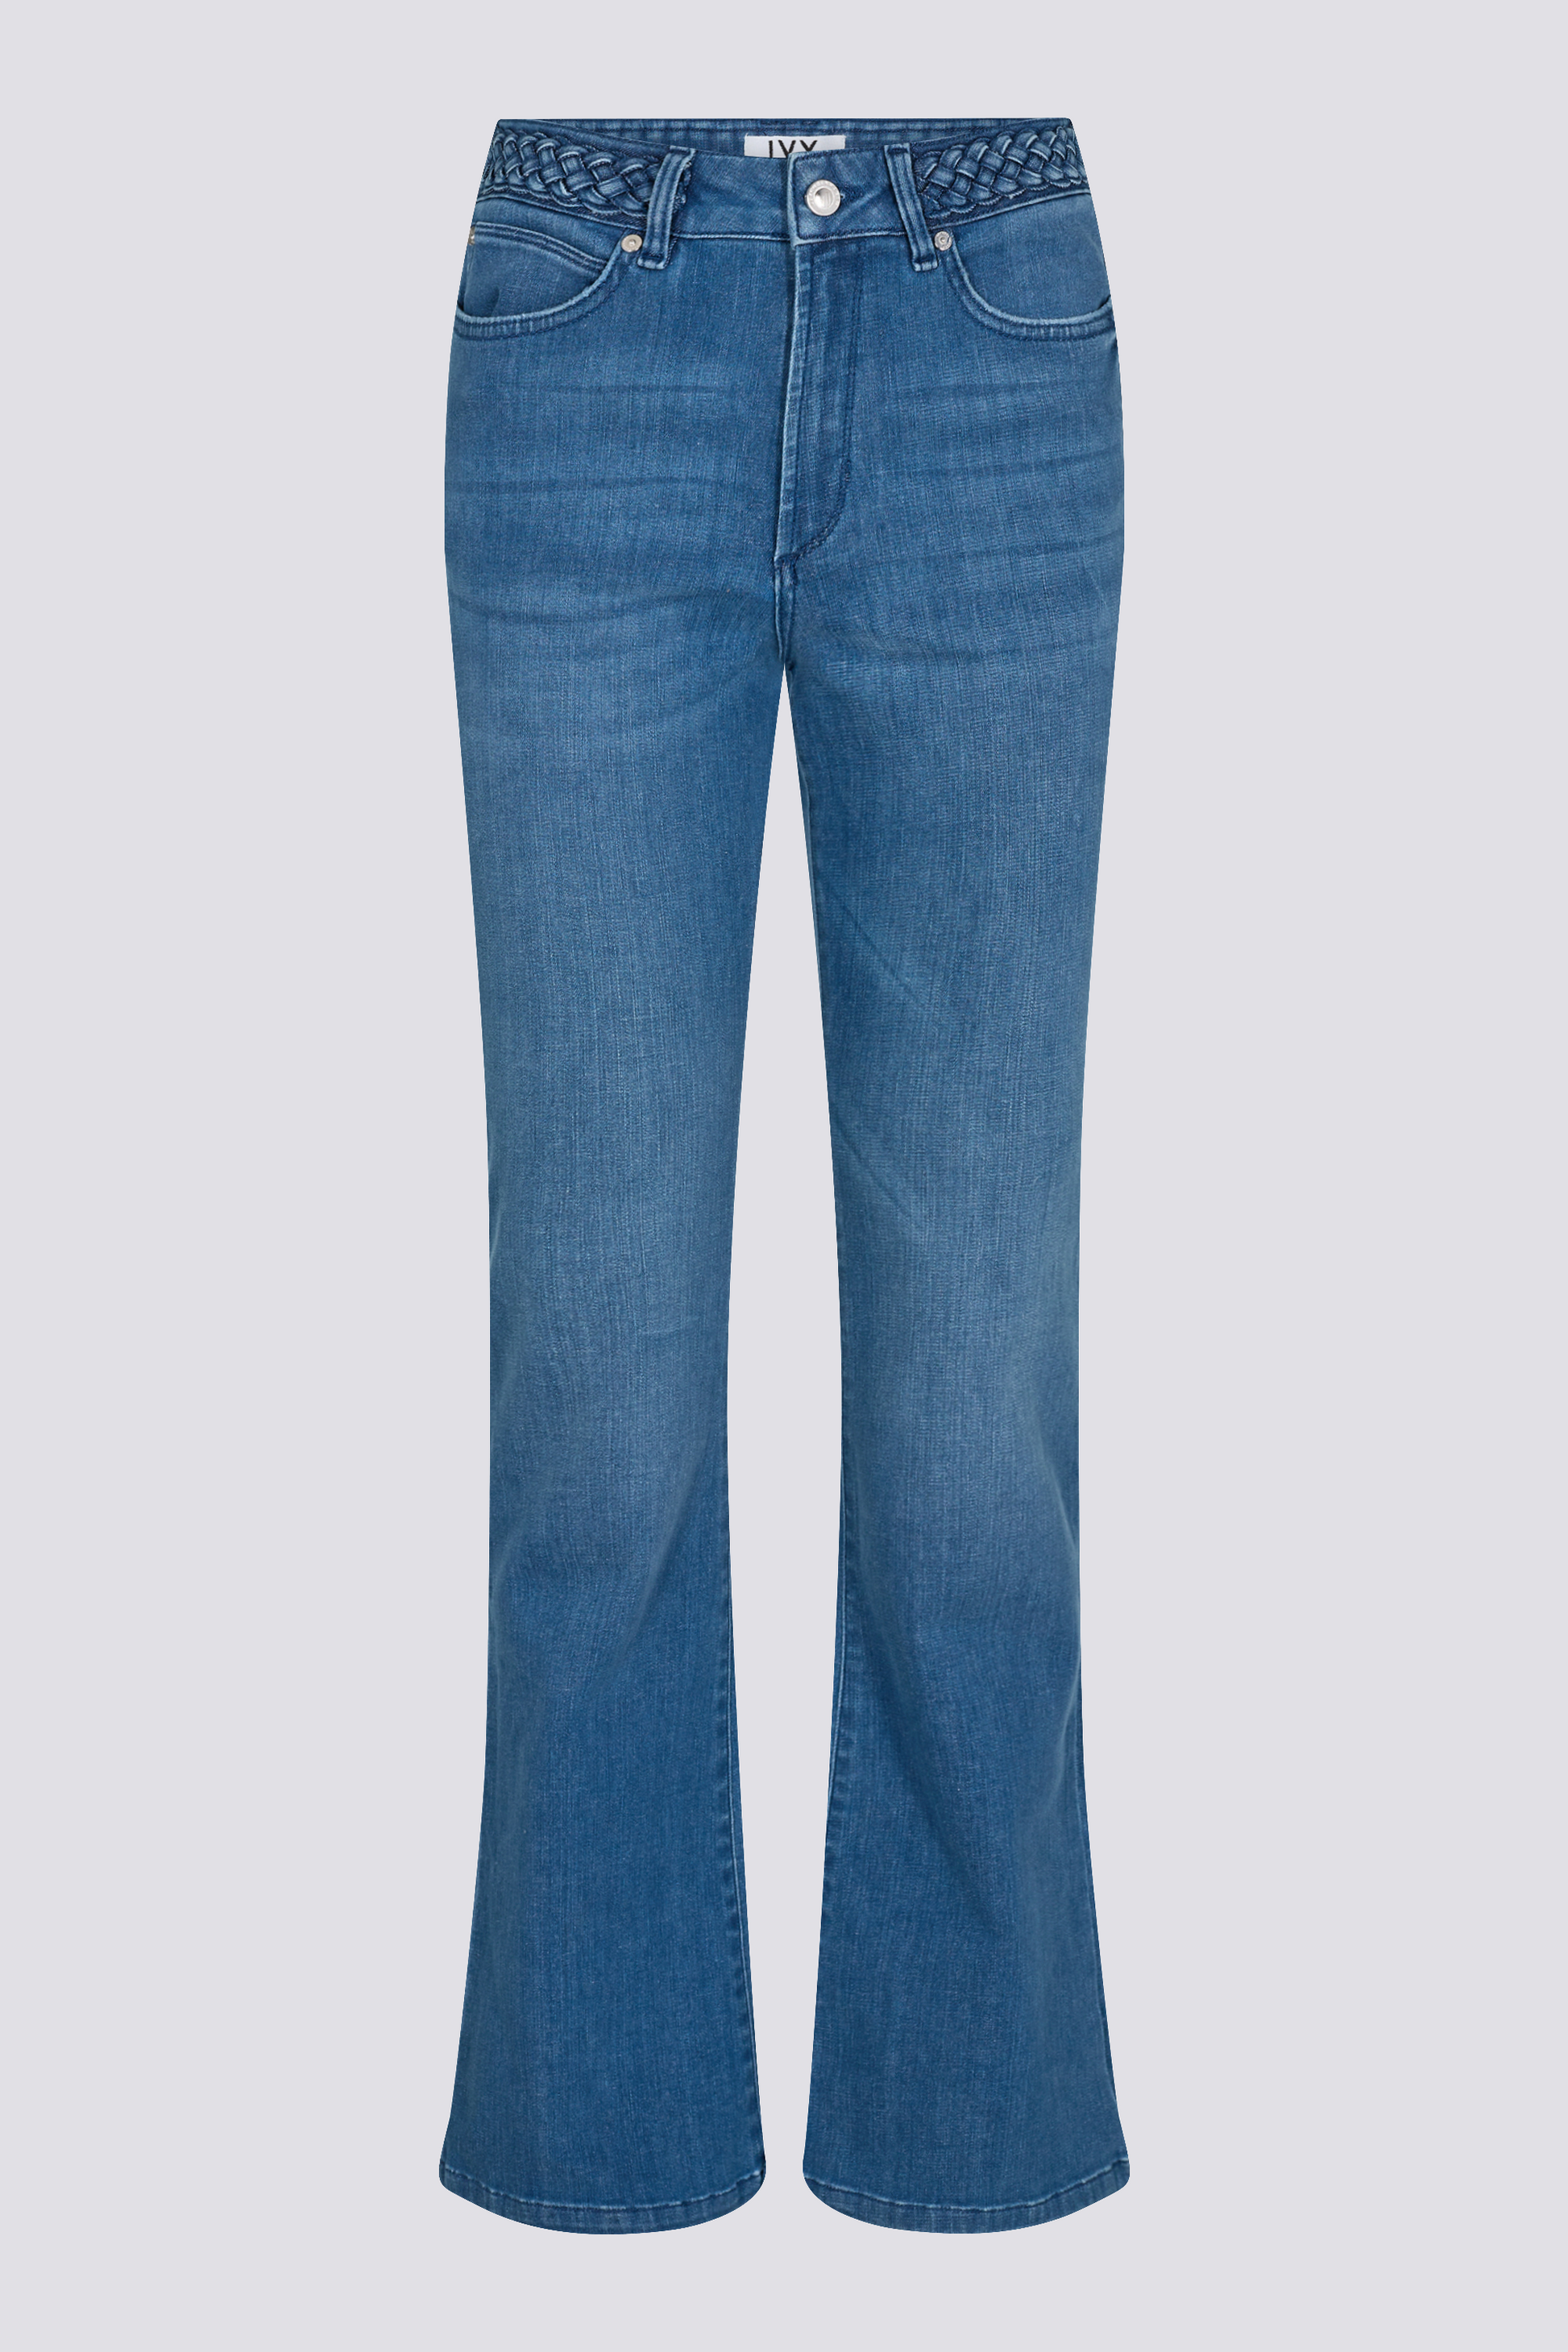 IVY Copenhagen IVY-Tara 70's Jeans Wash Dark Lecco Jeans & Pants 51 Denim Blue